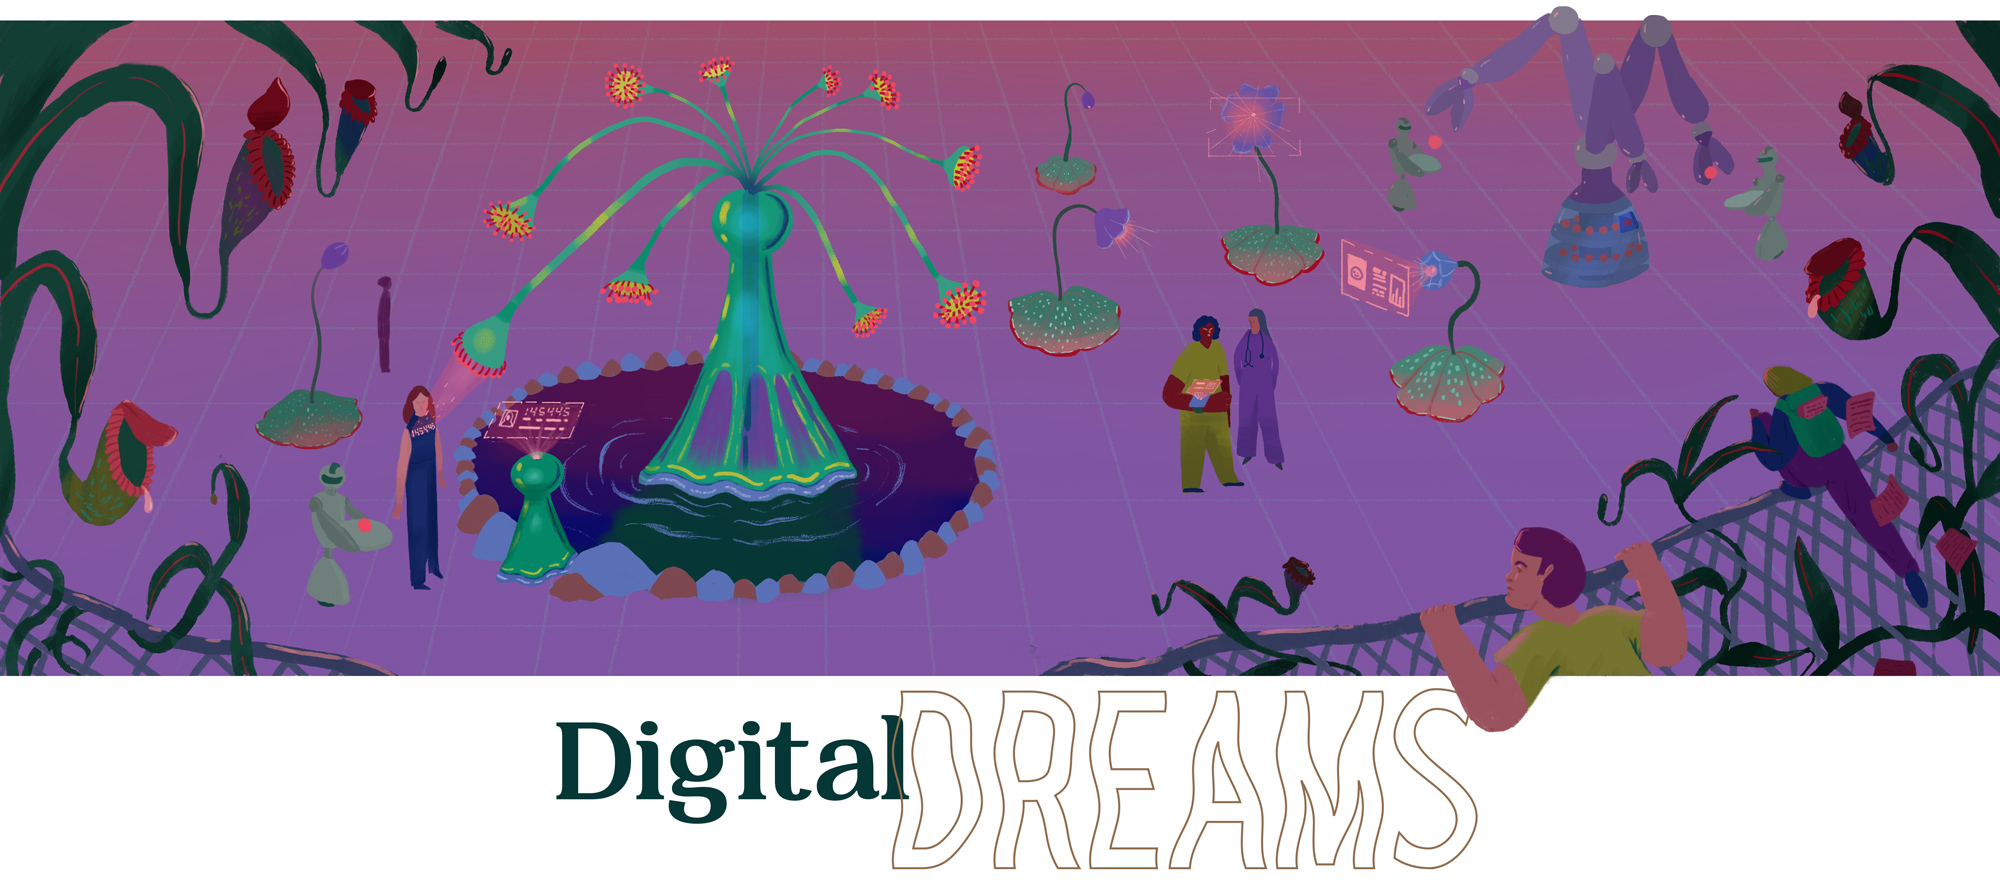 Digital Dreams (title)